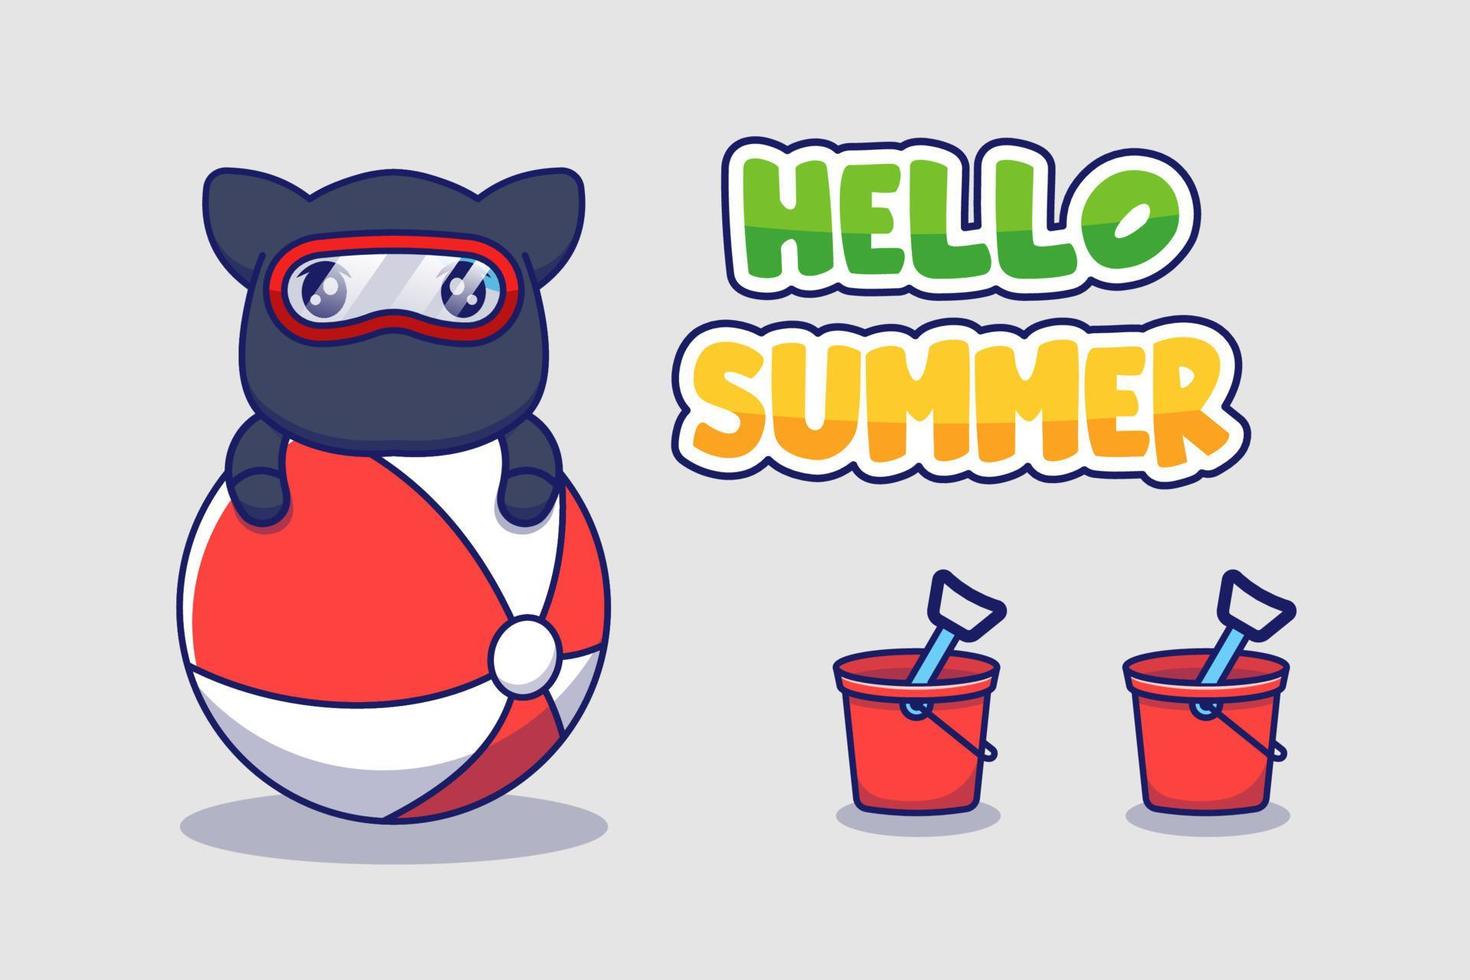 Cute ninja cat with hello summer greeting banner vector